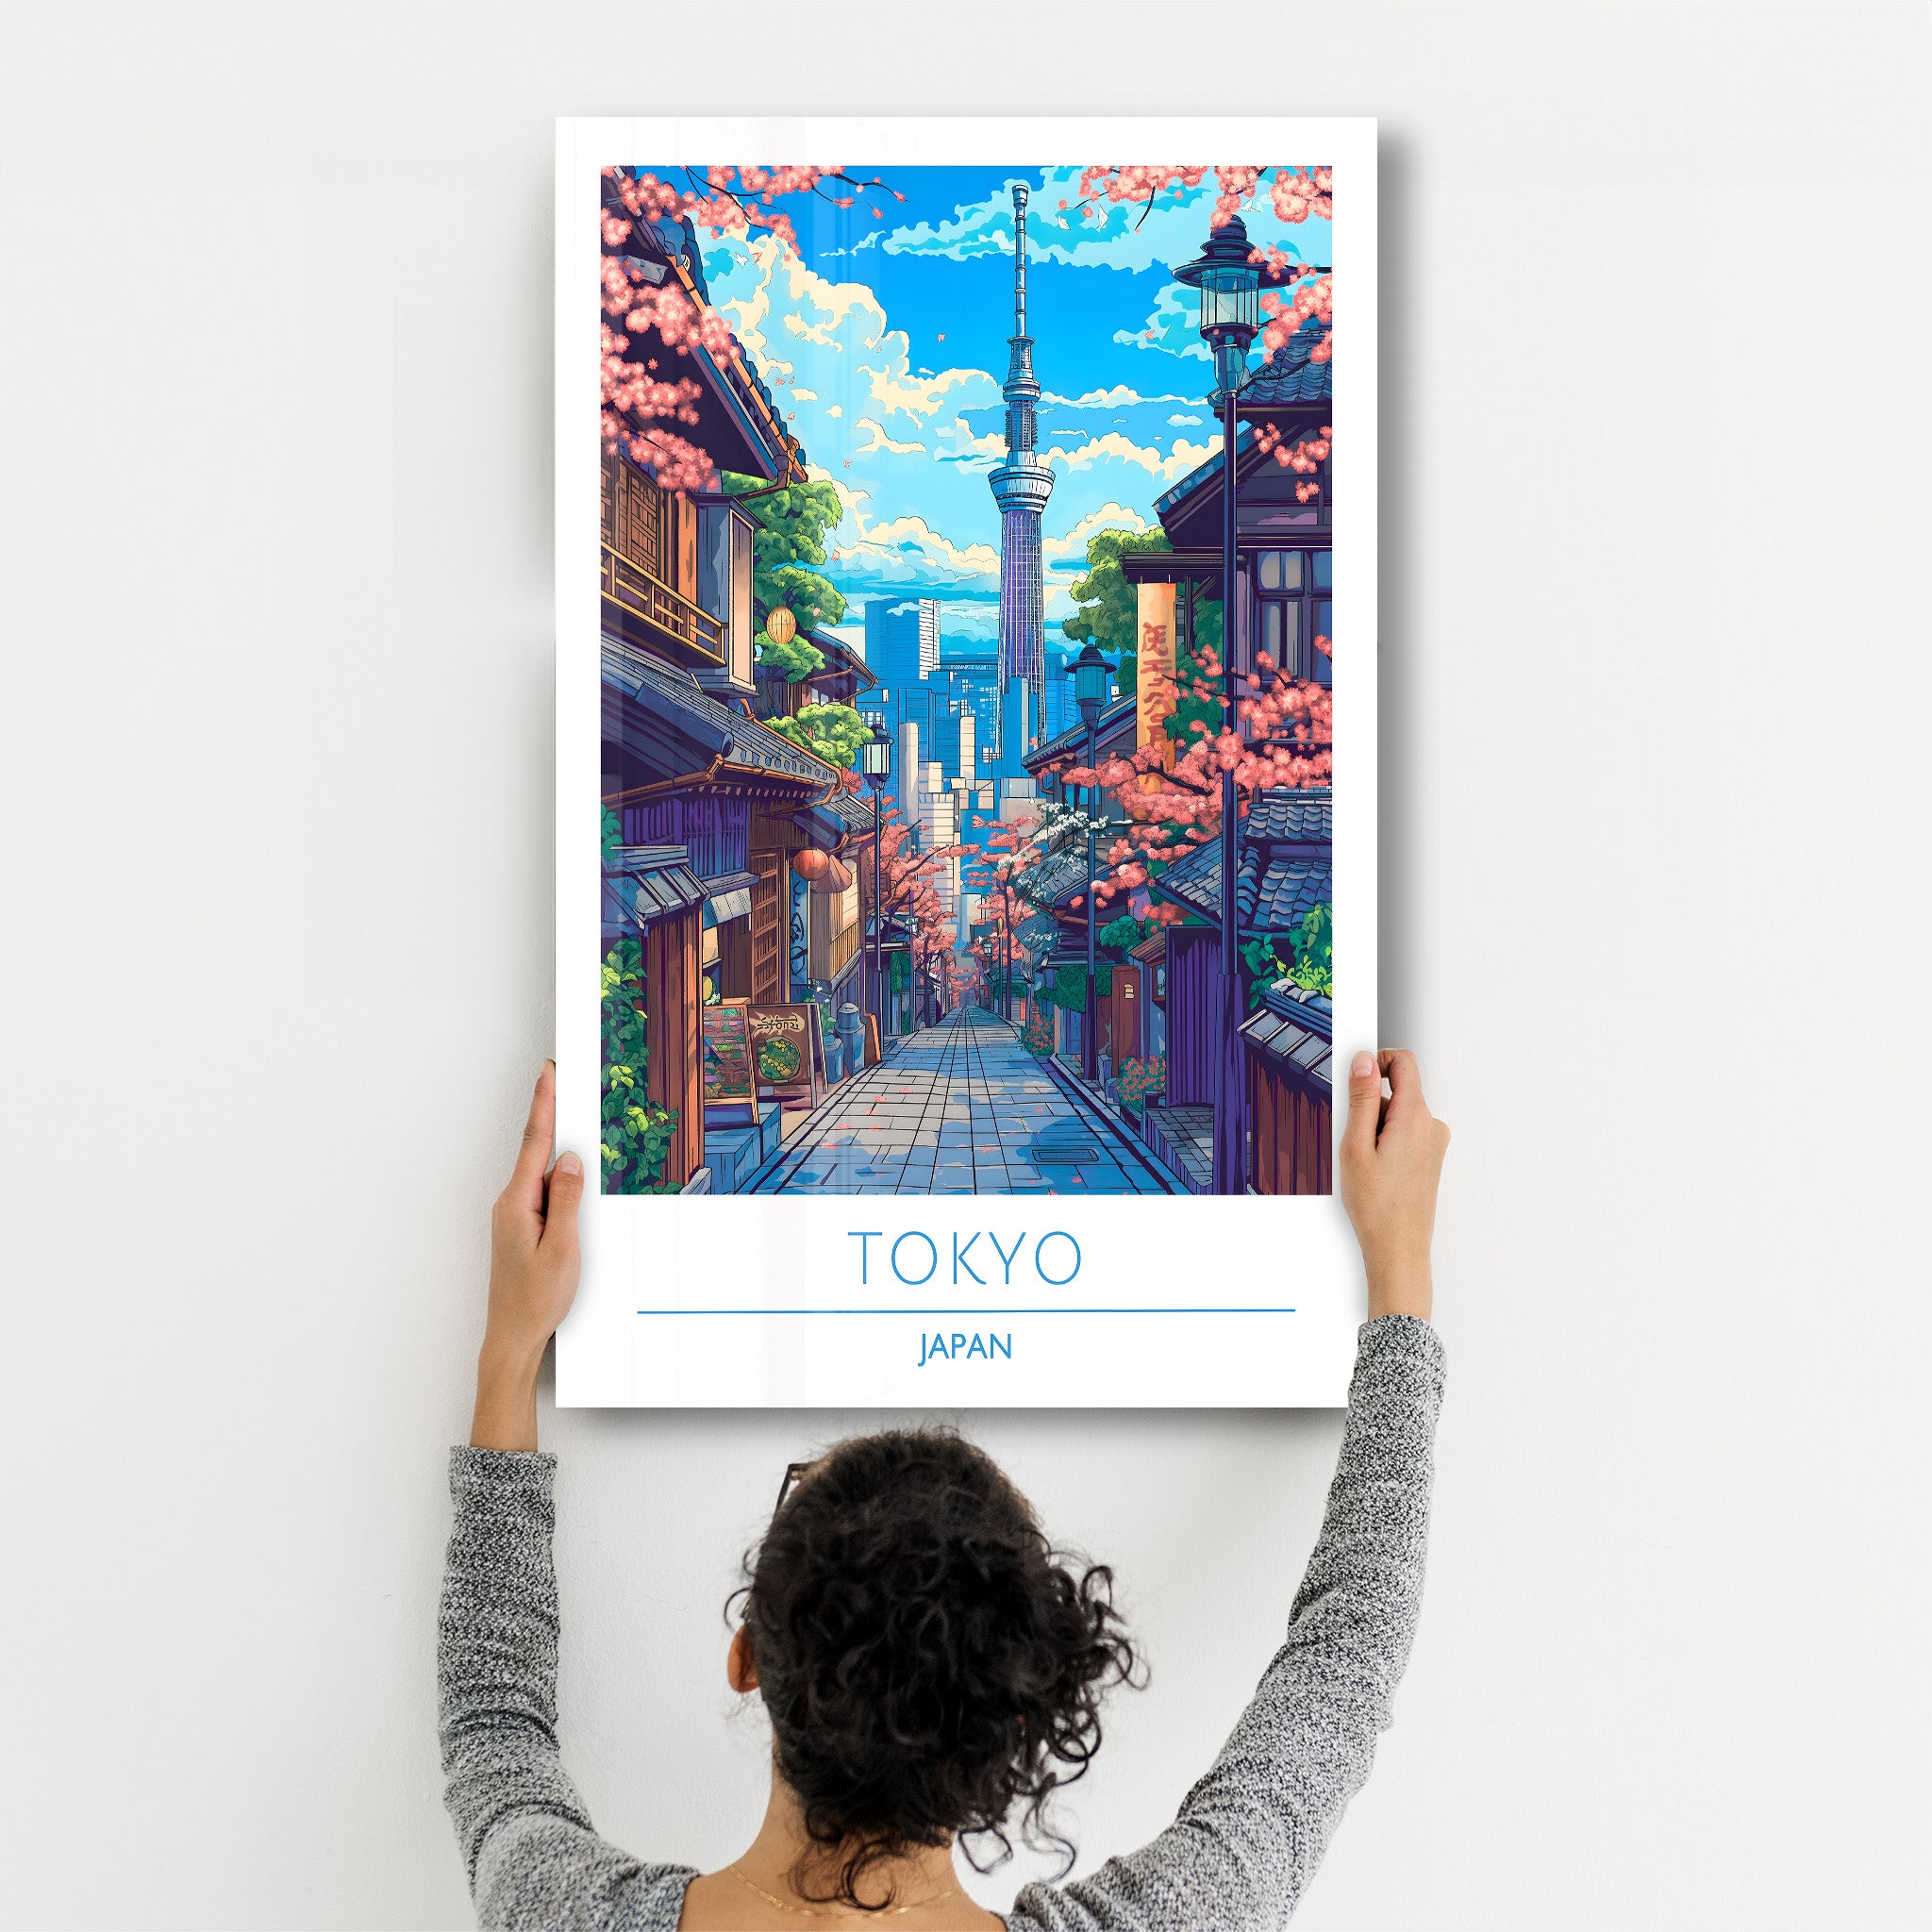 Tokyo Japan-Travel Posters | Glass Wall Art